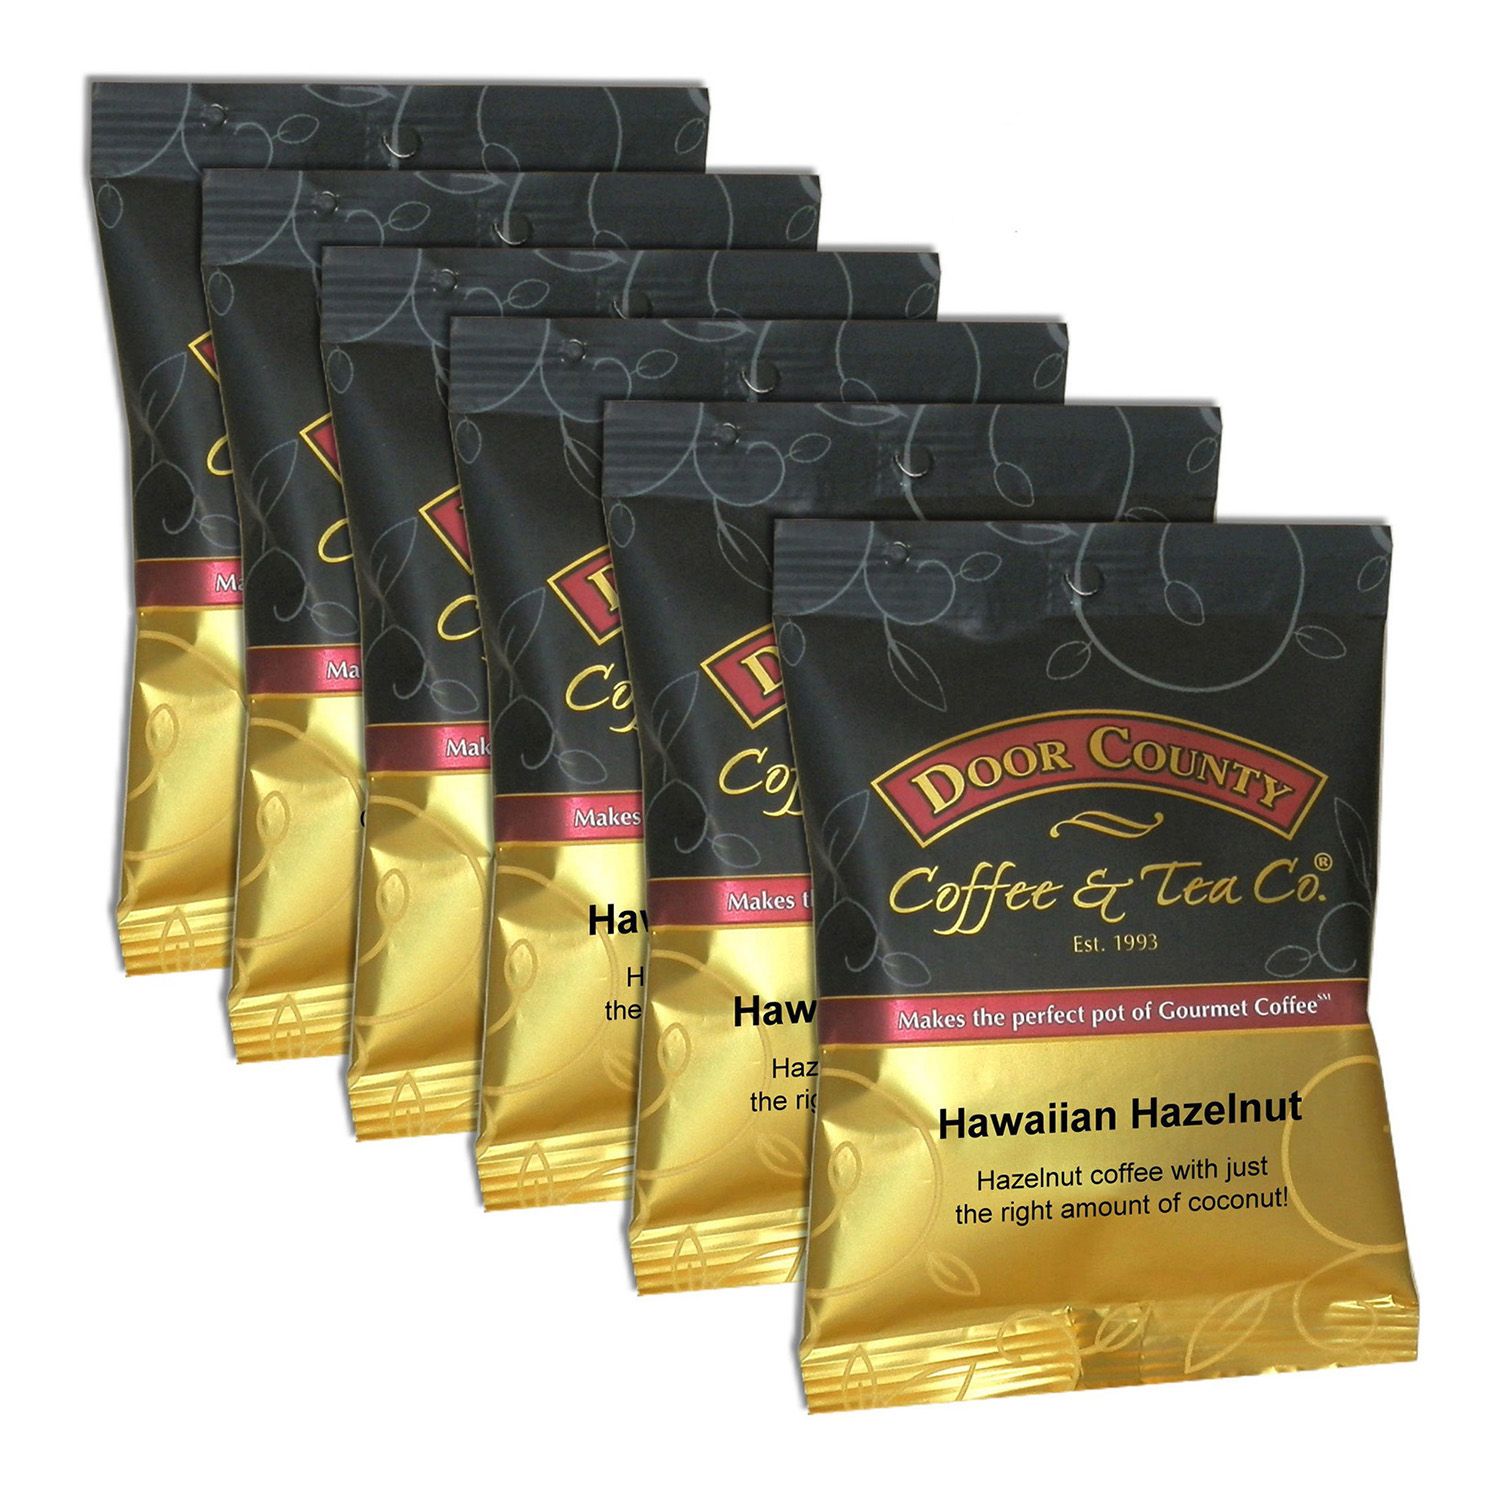 Image for Door County Coffee Hawaiian Hazelnut Ground Coffee 6-pk. at Kohl's.